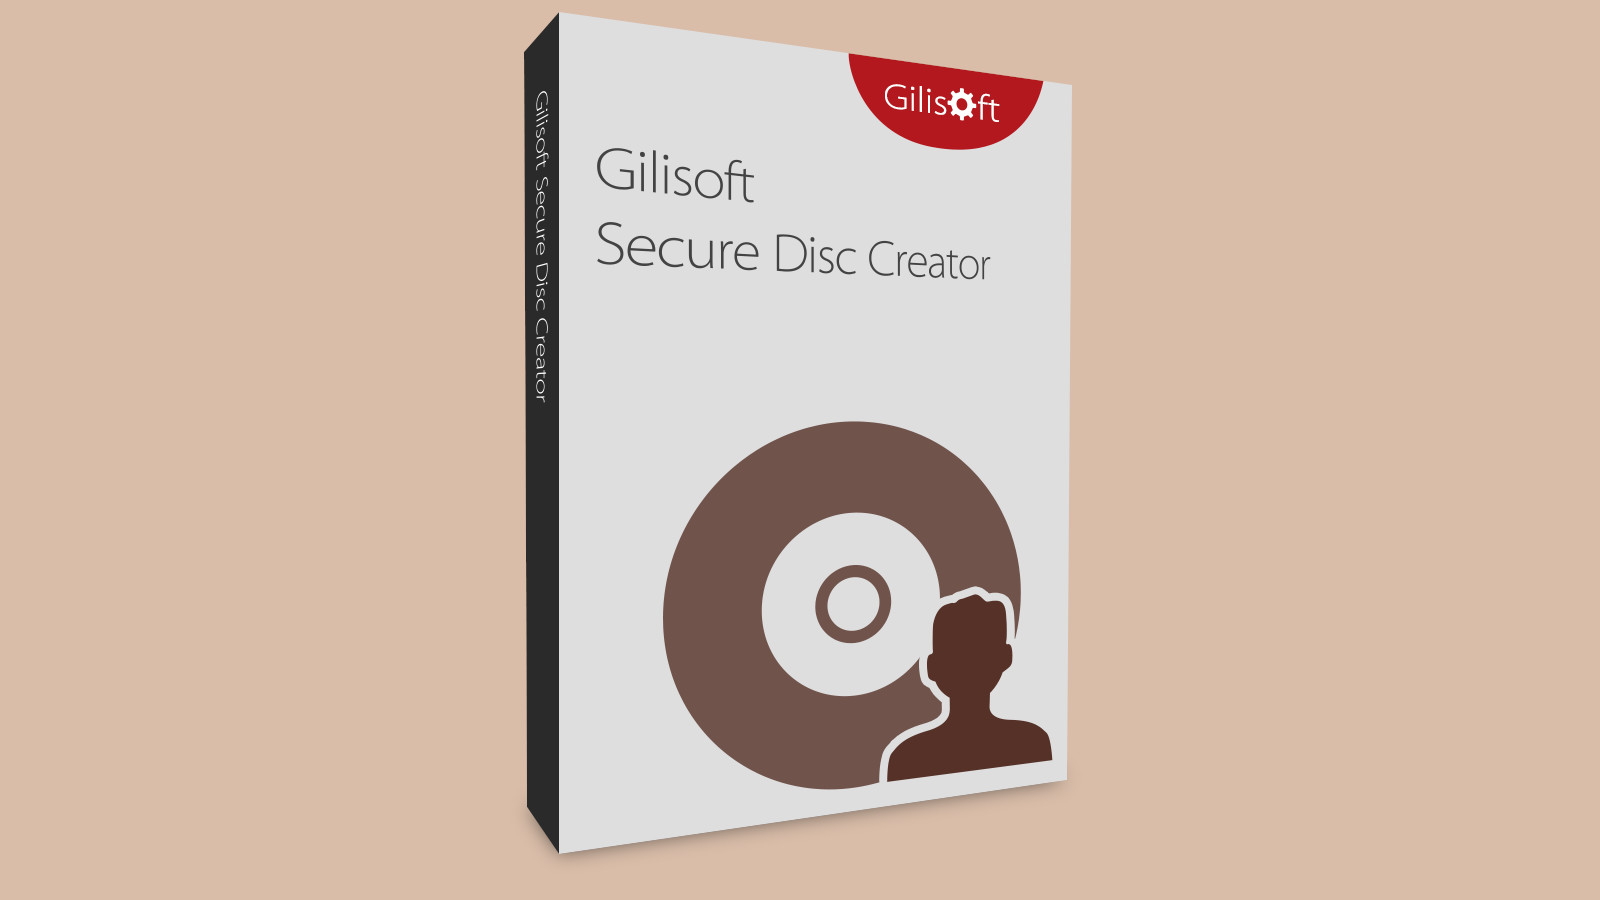 Gilisoft Secure Disc Creator CD Key $6.84